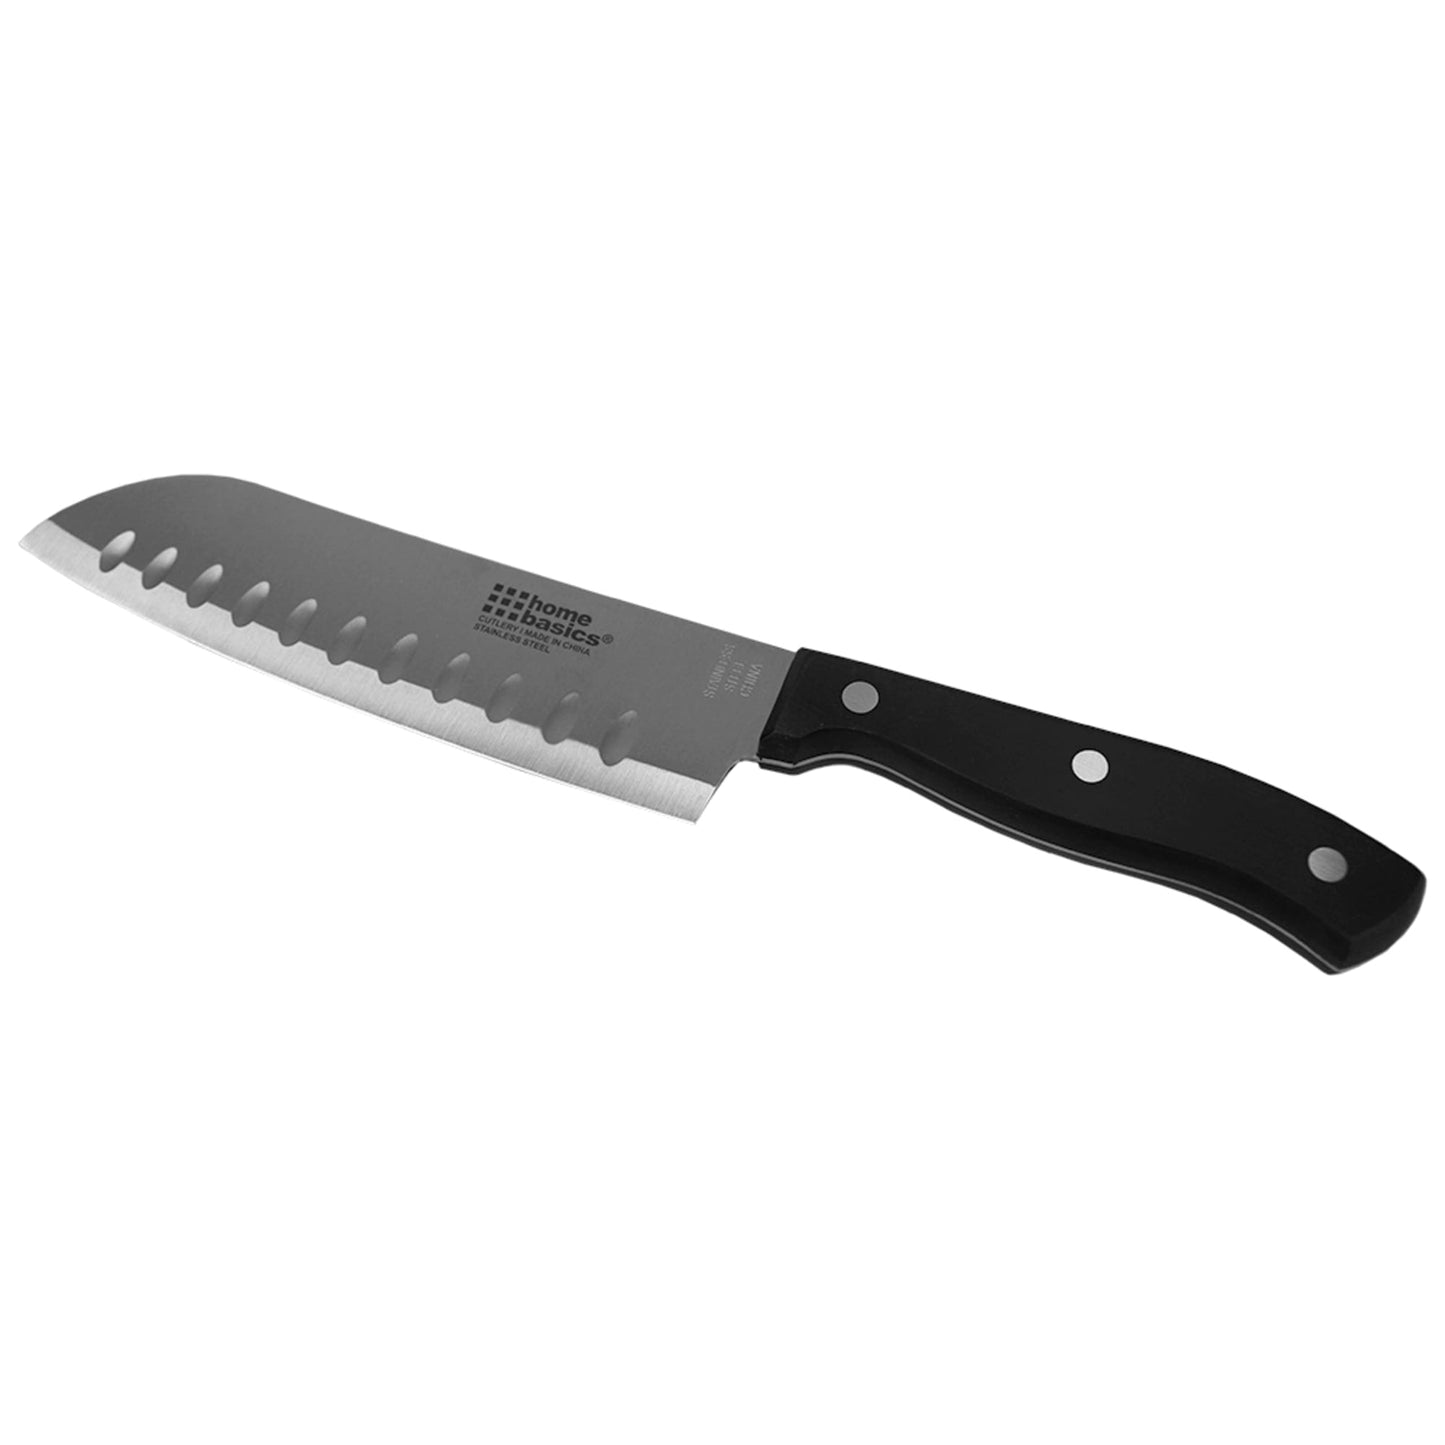 5" Stainless Steel Santoku Knife with Contoured Bakelite Handle, Black